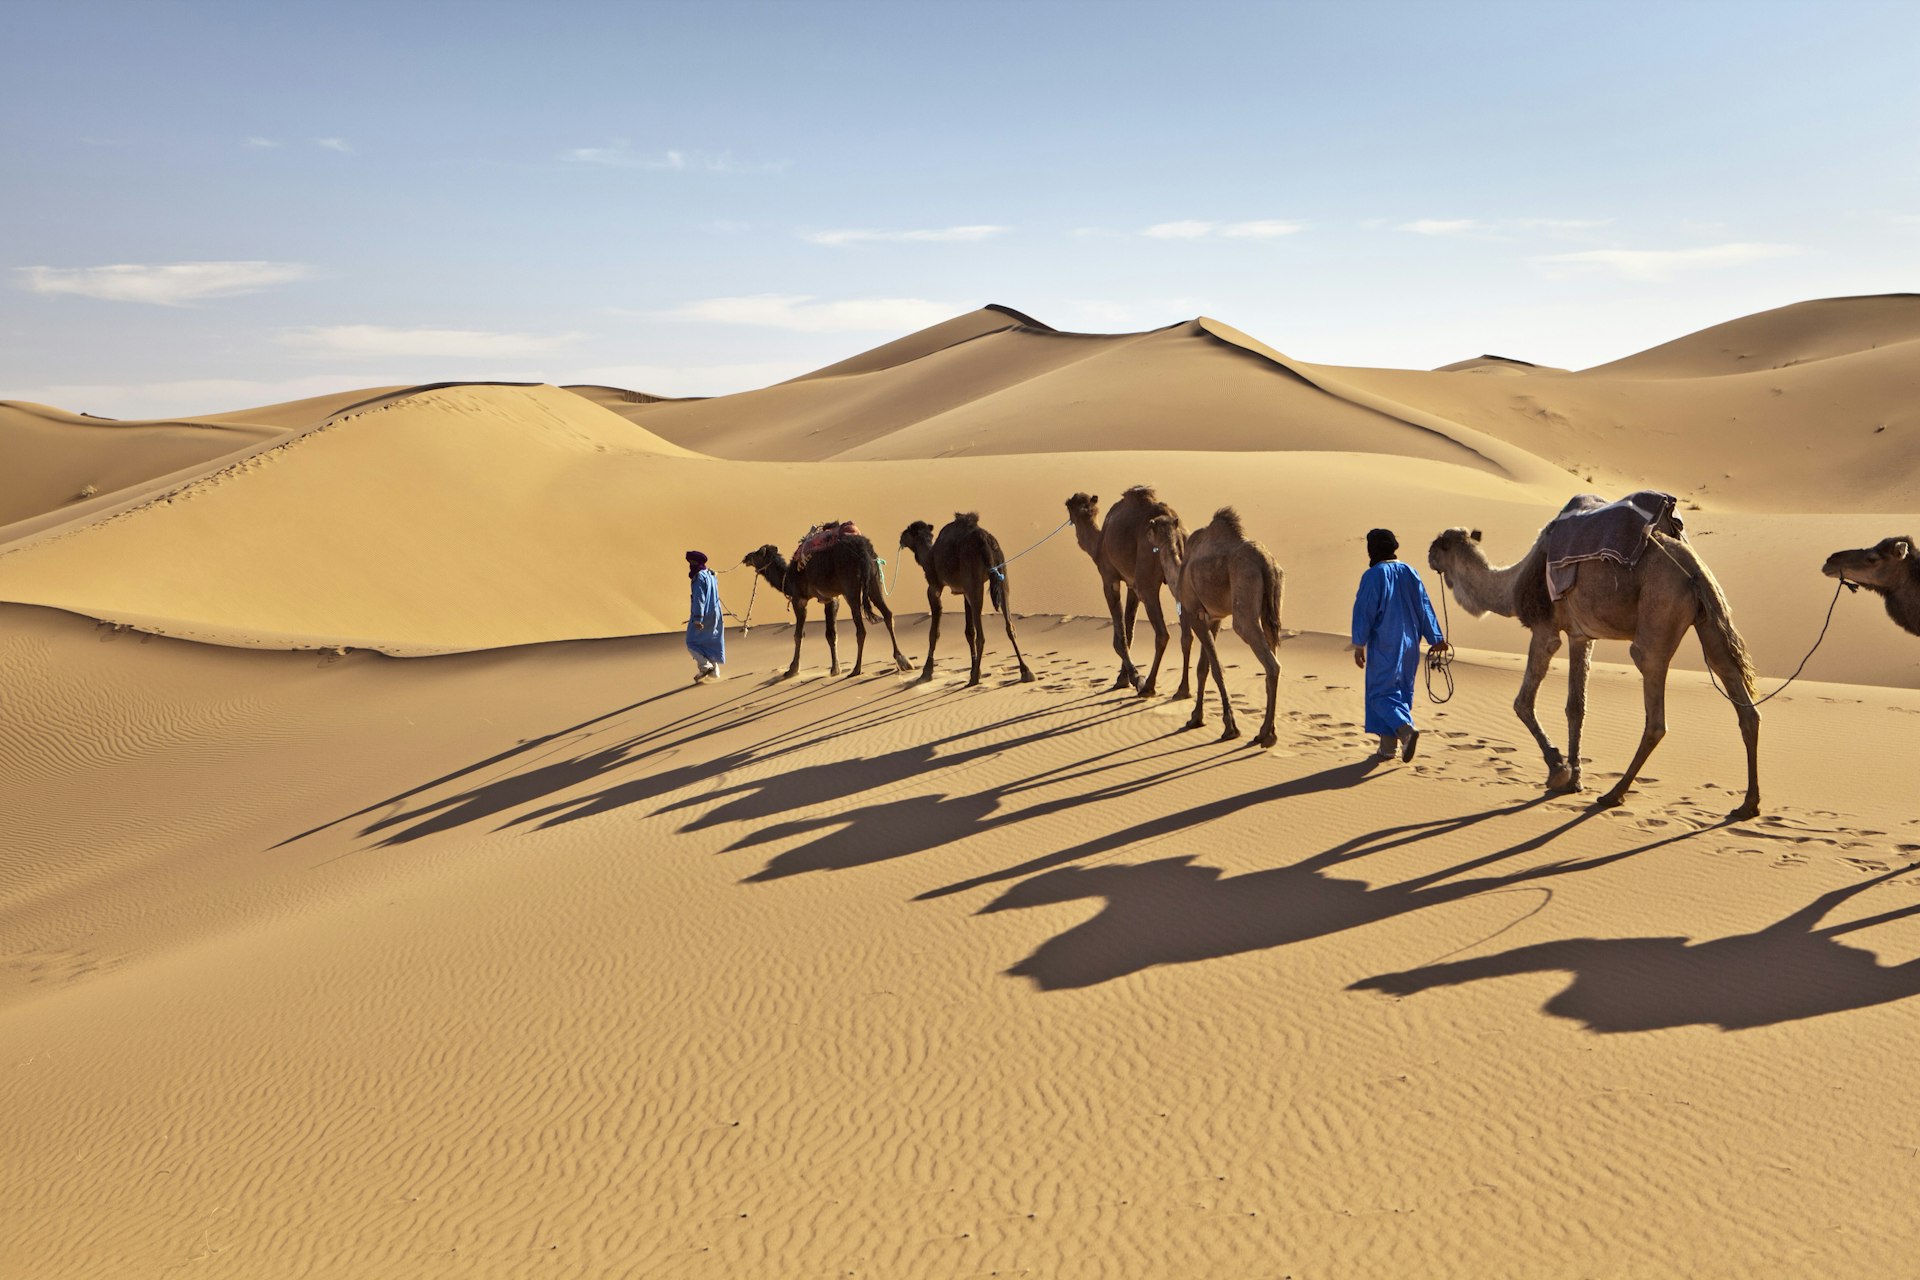  Camel drivers and camel caravan walk along the sand dunes in Erg Chigaga, Morocco